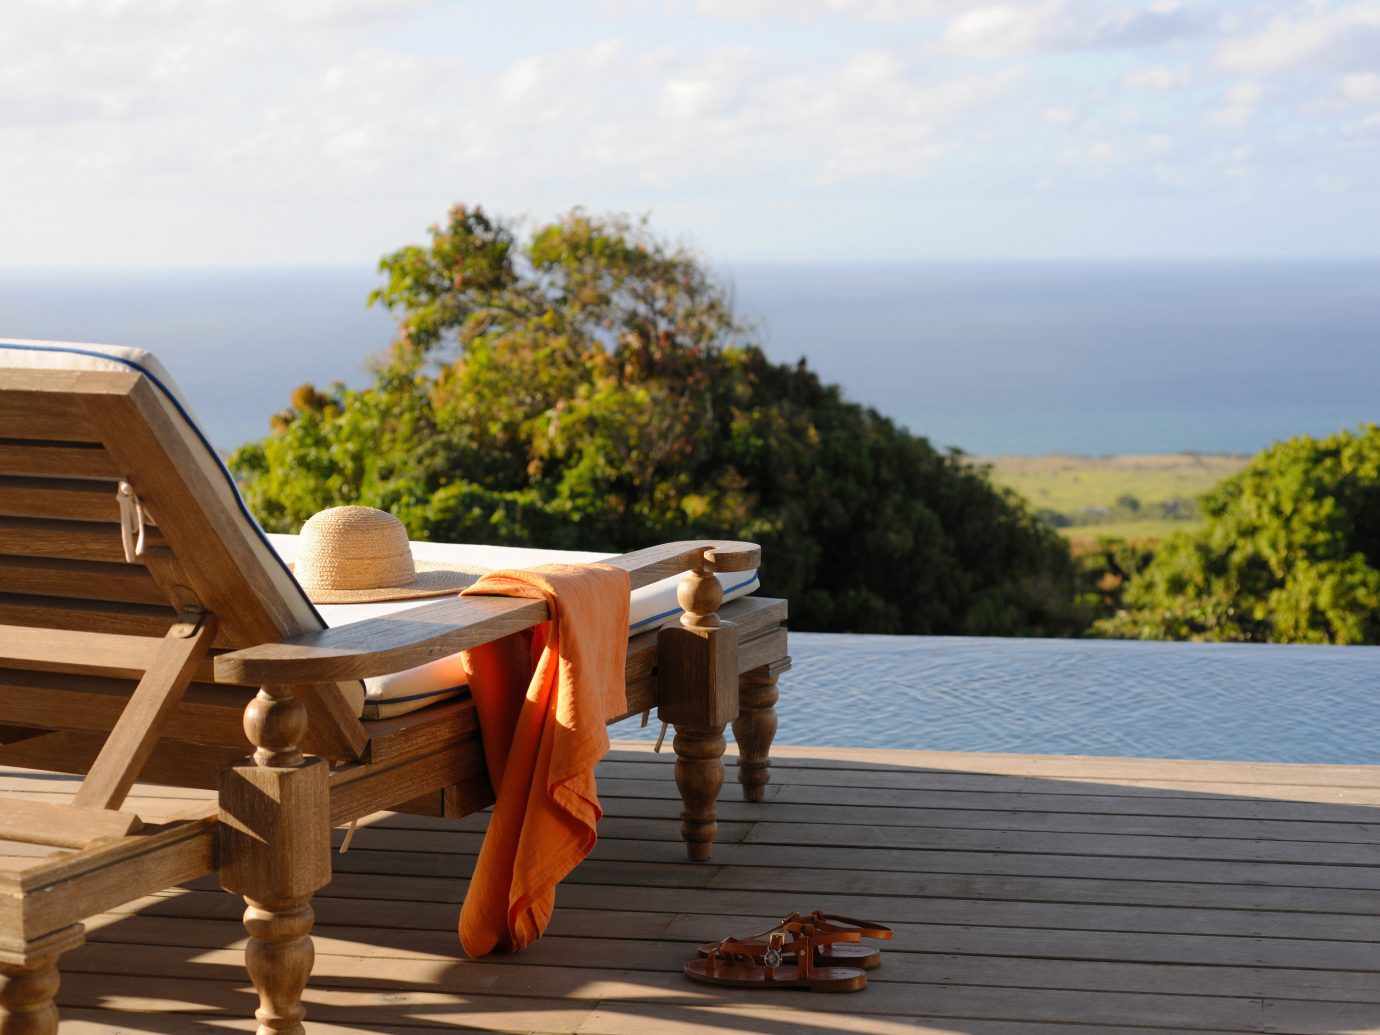 Hotels sky outdoor water leisure vacation furniture wooden wood Beach walkway overlooking seat Deck